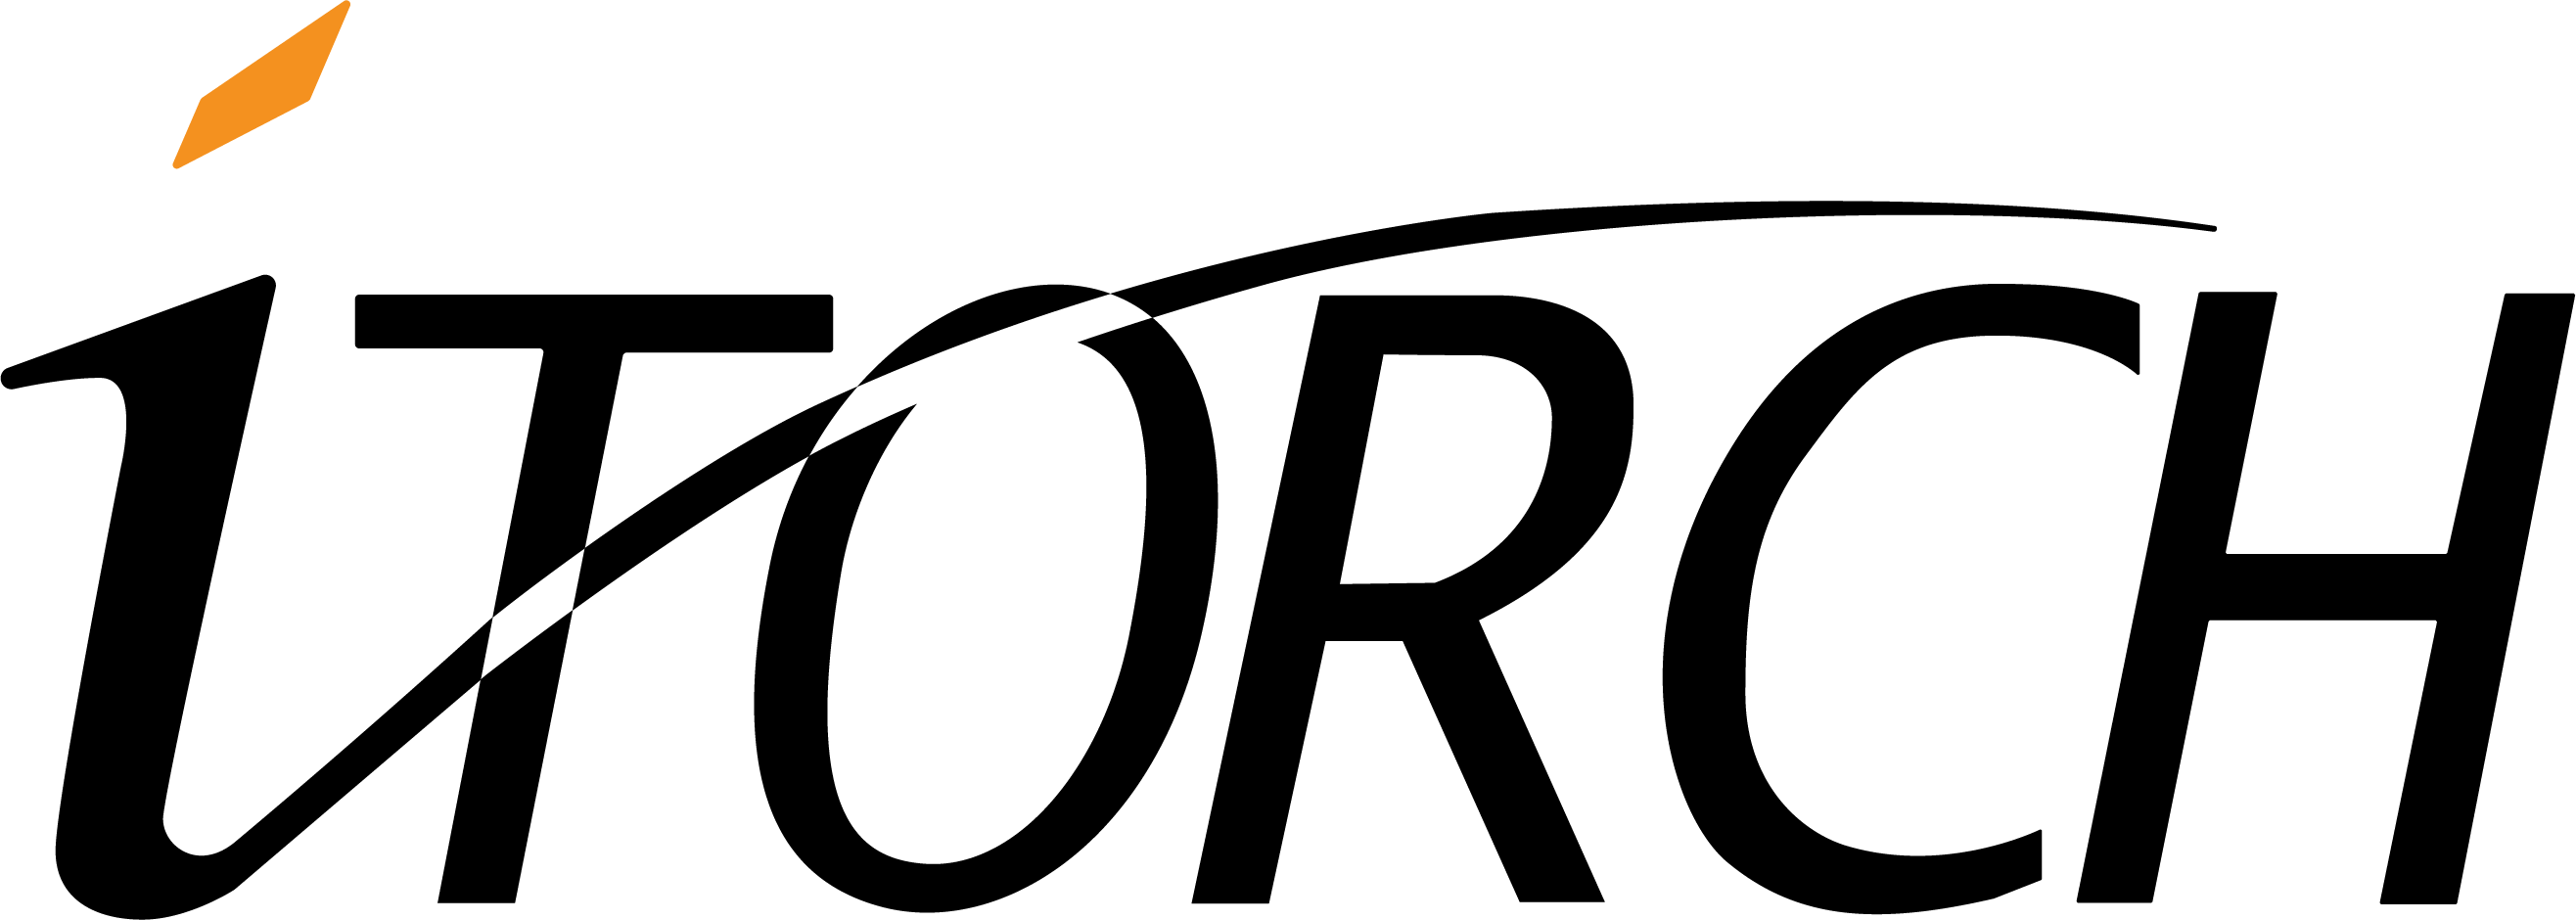 Itorch apparel logo